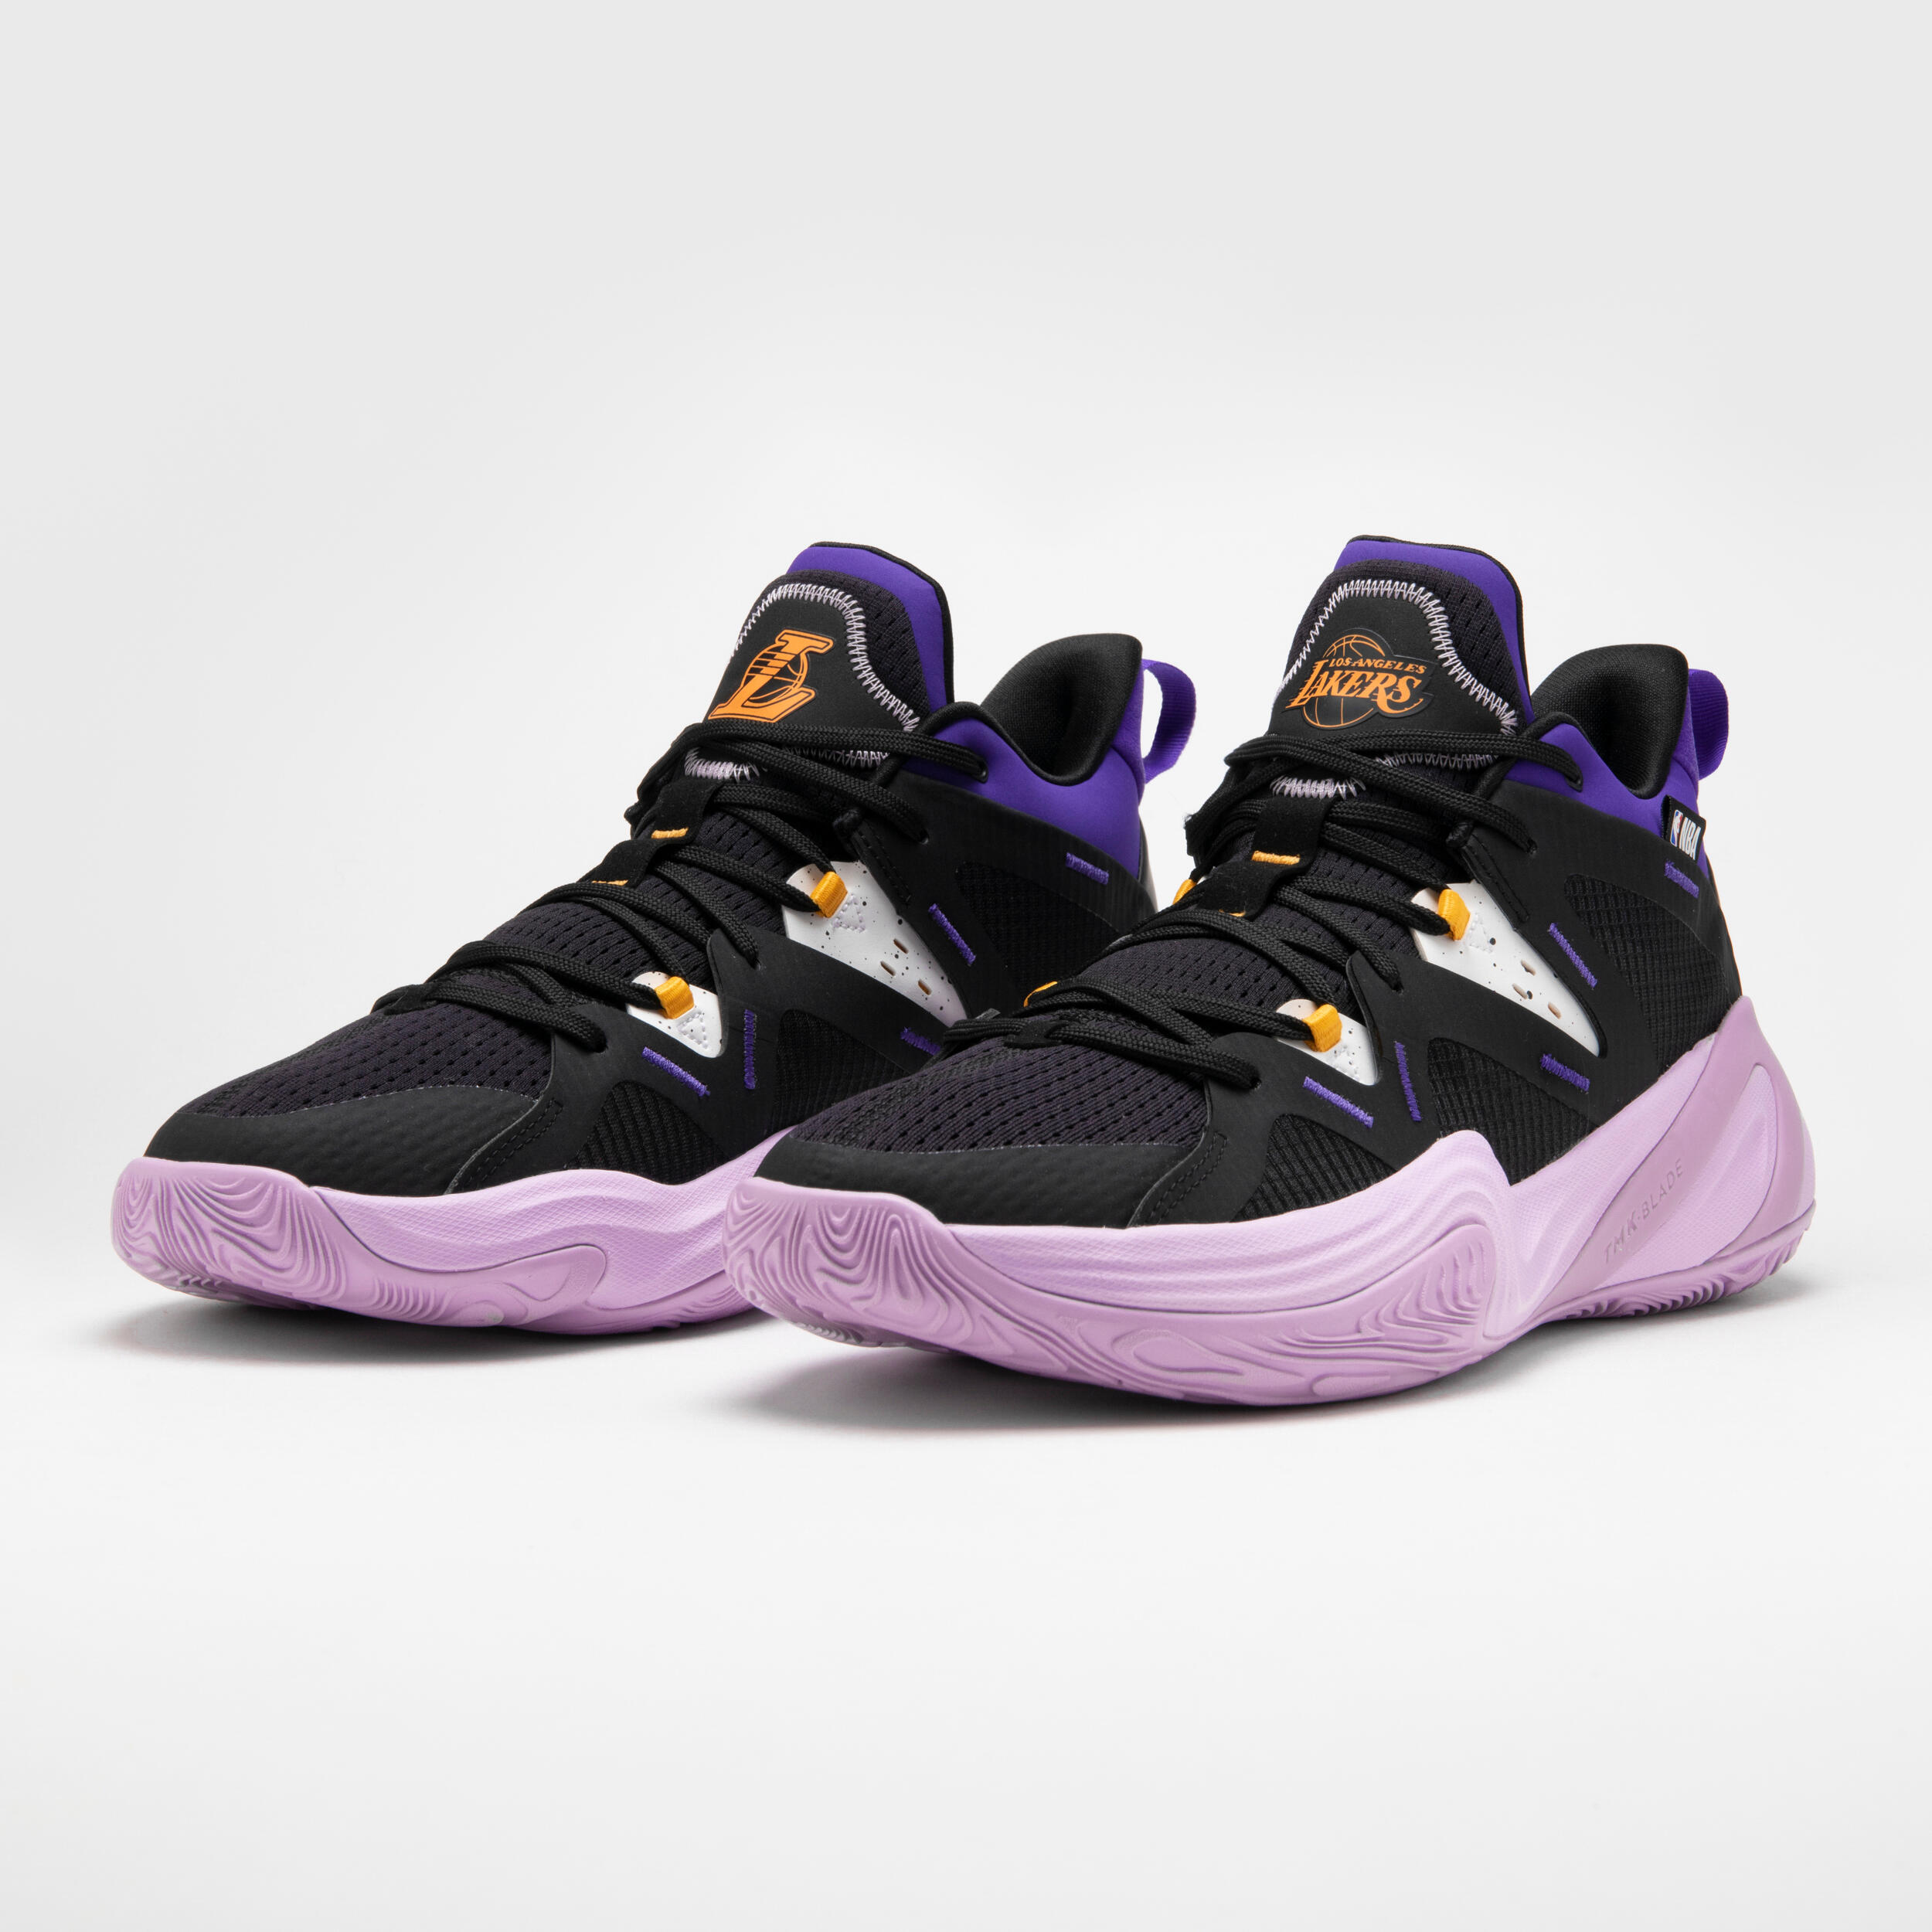 Men's/Women's Basketball Shoes 900 NBA MID-3 - Los Angeles Lakers/Black 4/9